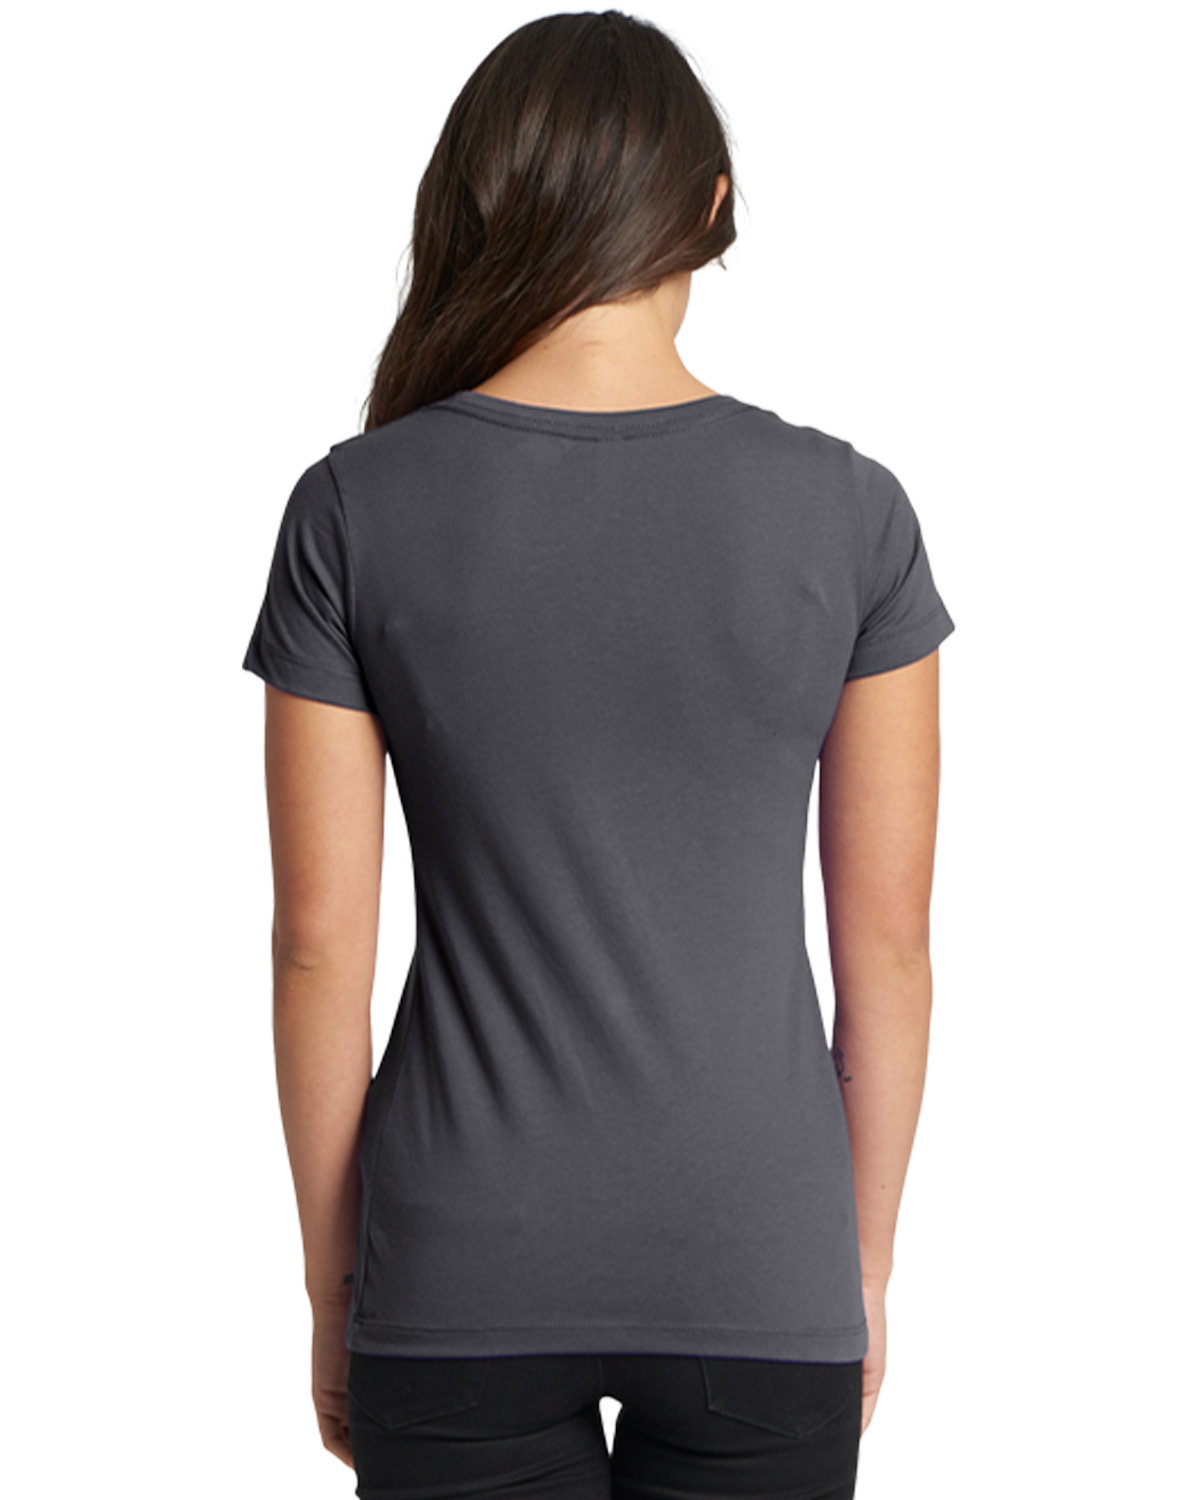 Next Level Apparel Ladies' Ideal T-Shirt | alphabroder Canada